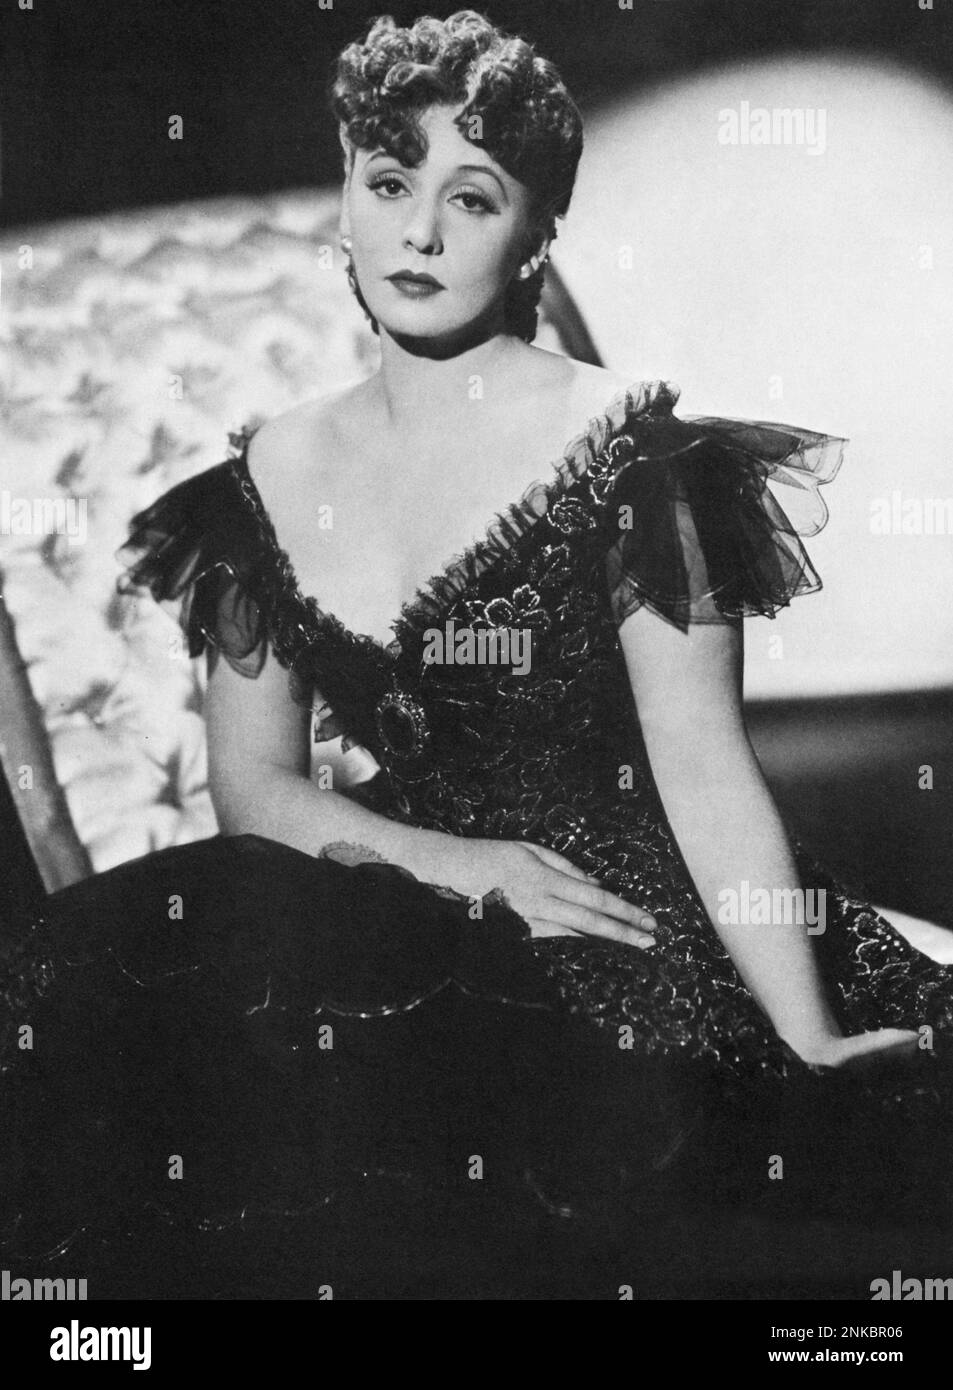 1939 : The Nazi Diva german singer and movie actress ZARAH LEANDER ( born Zarah Stina Hedberg , Karlstad , Sweden 15 mars 1907 - Stockholm , Sweden 23 june 1981 ) in ES WAR EINE RAUSCHENDE BALLNACHT ( Una inebriante notte di ballo ) by Carl Froelich - MOVIE - CINEMA - CANTANTE - NAZIST - NAZISMO - WWII - SECONDA GUERRA MONDIALE - portrait - ritratto  - decolleté - scollatura - neckopening - neckline - tulle  - DIVA - DIVINA ----  Archivio GBB Stock Photo